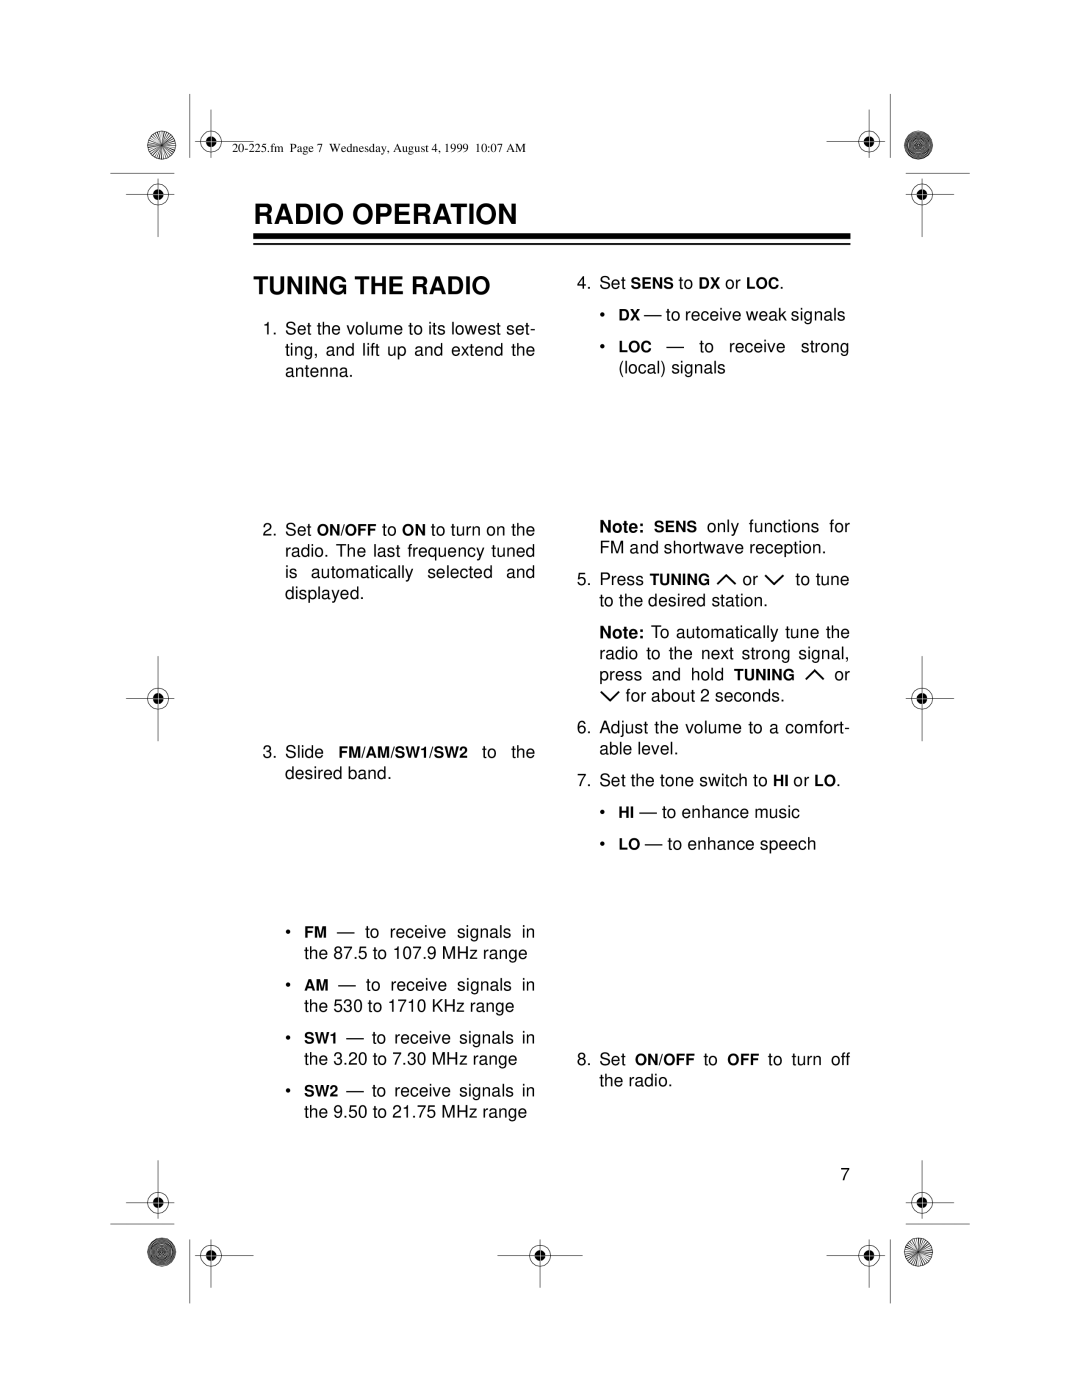 Radio Shack DX-395 owner manual Radio Operation, Tuning The Radio 